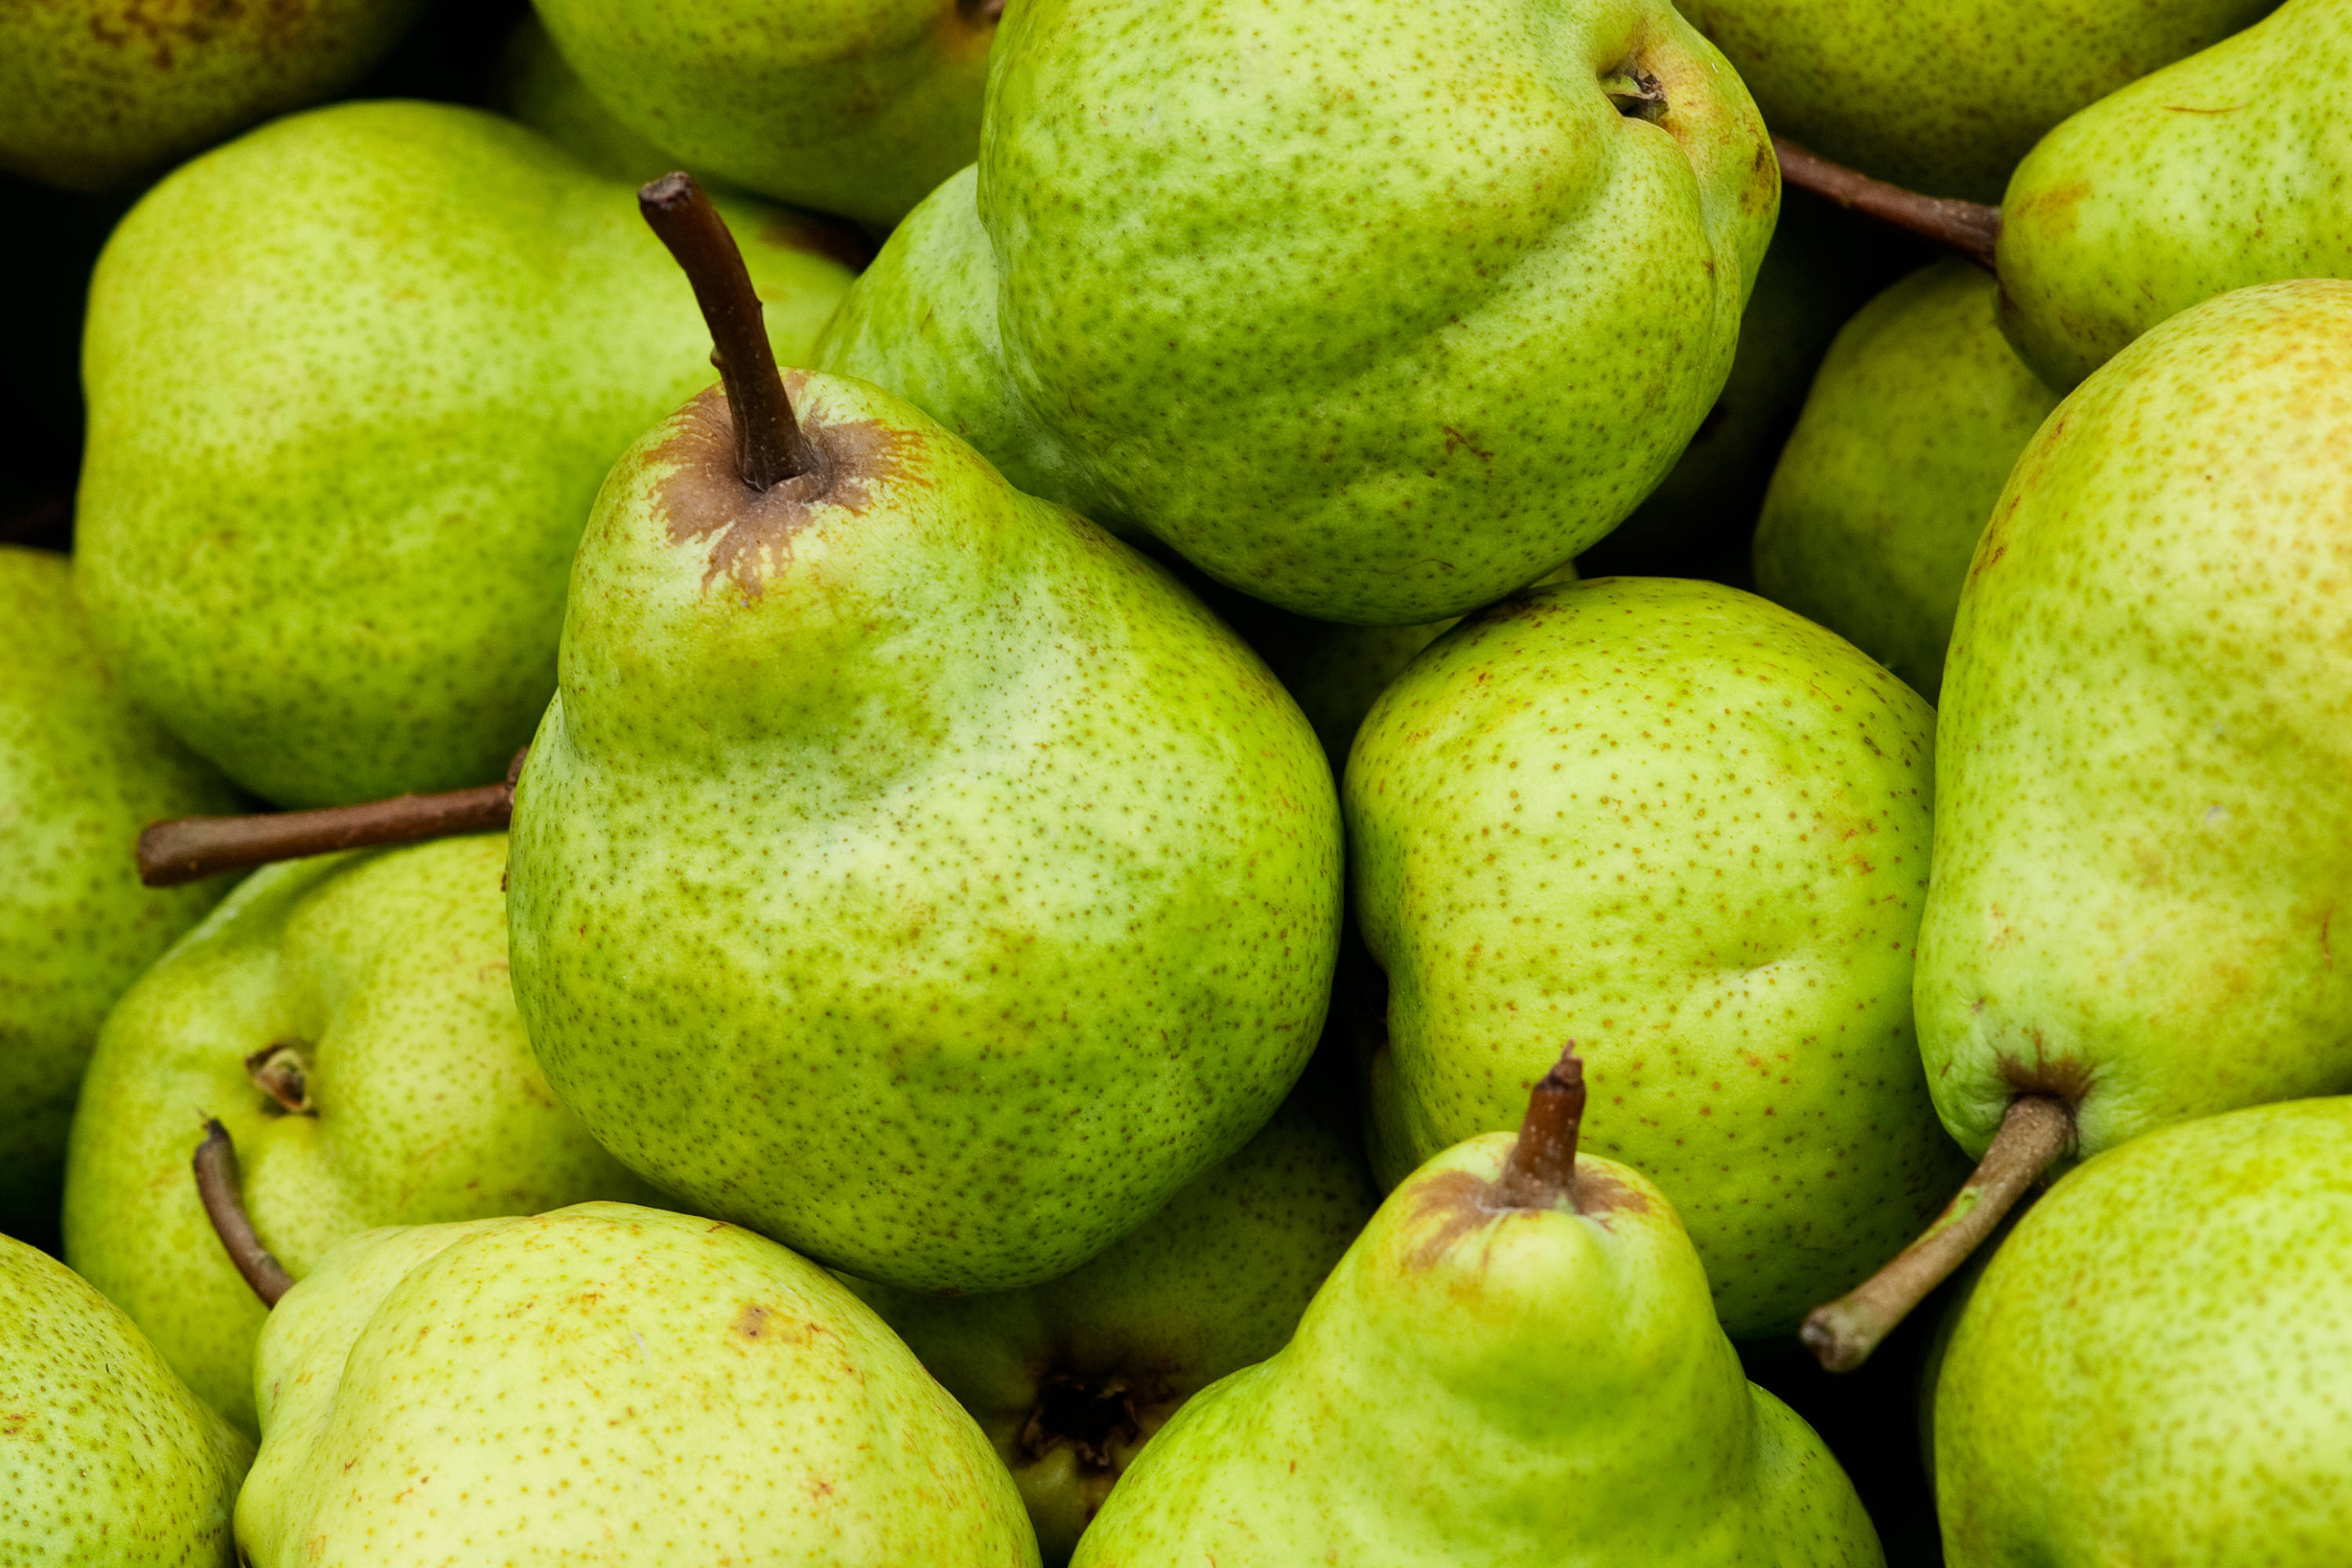 Green pears. Photo: FSTOPLIGHT / iStock.